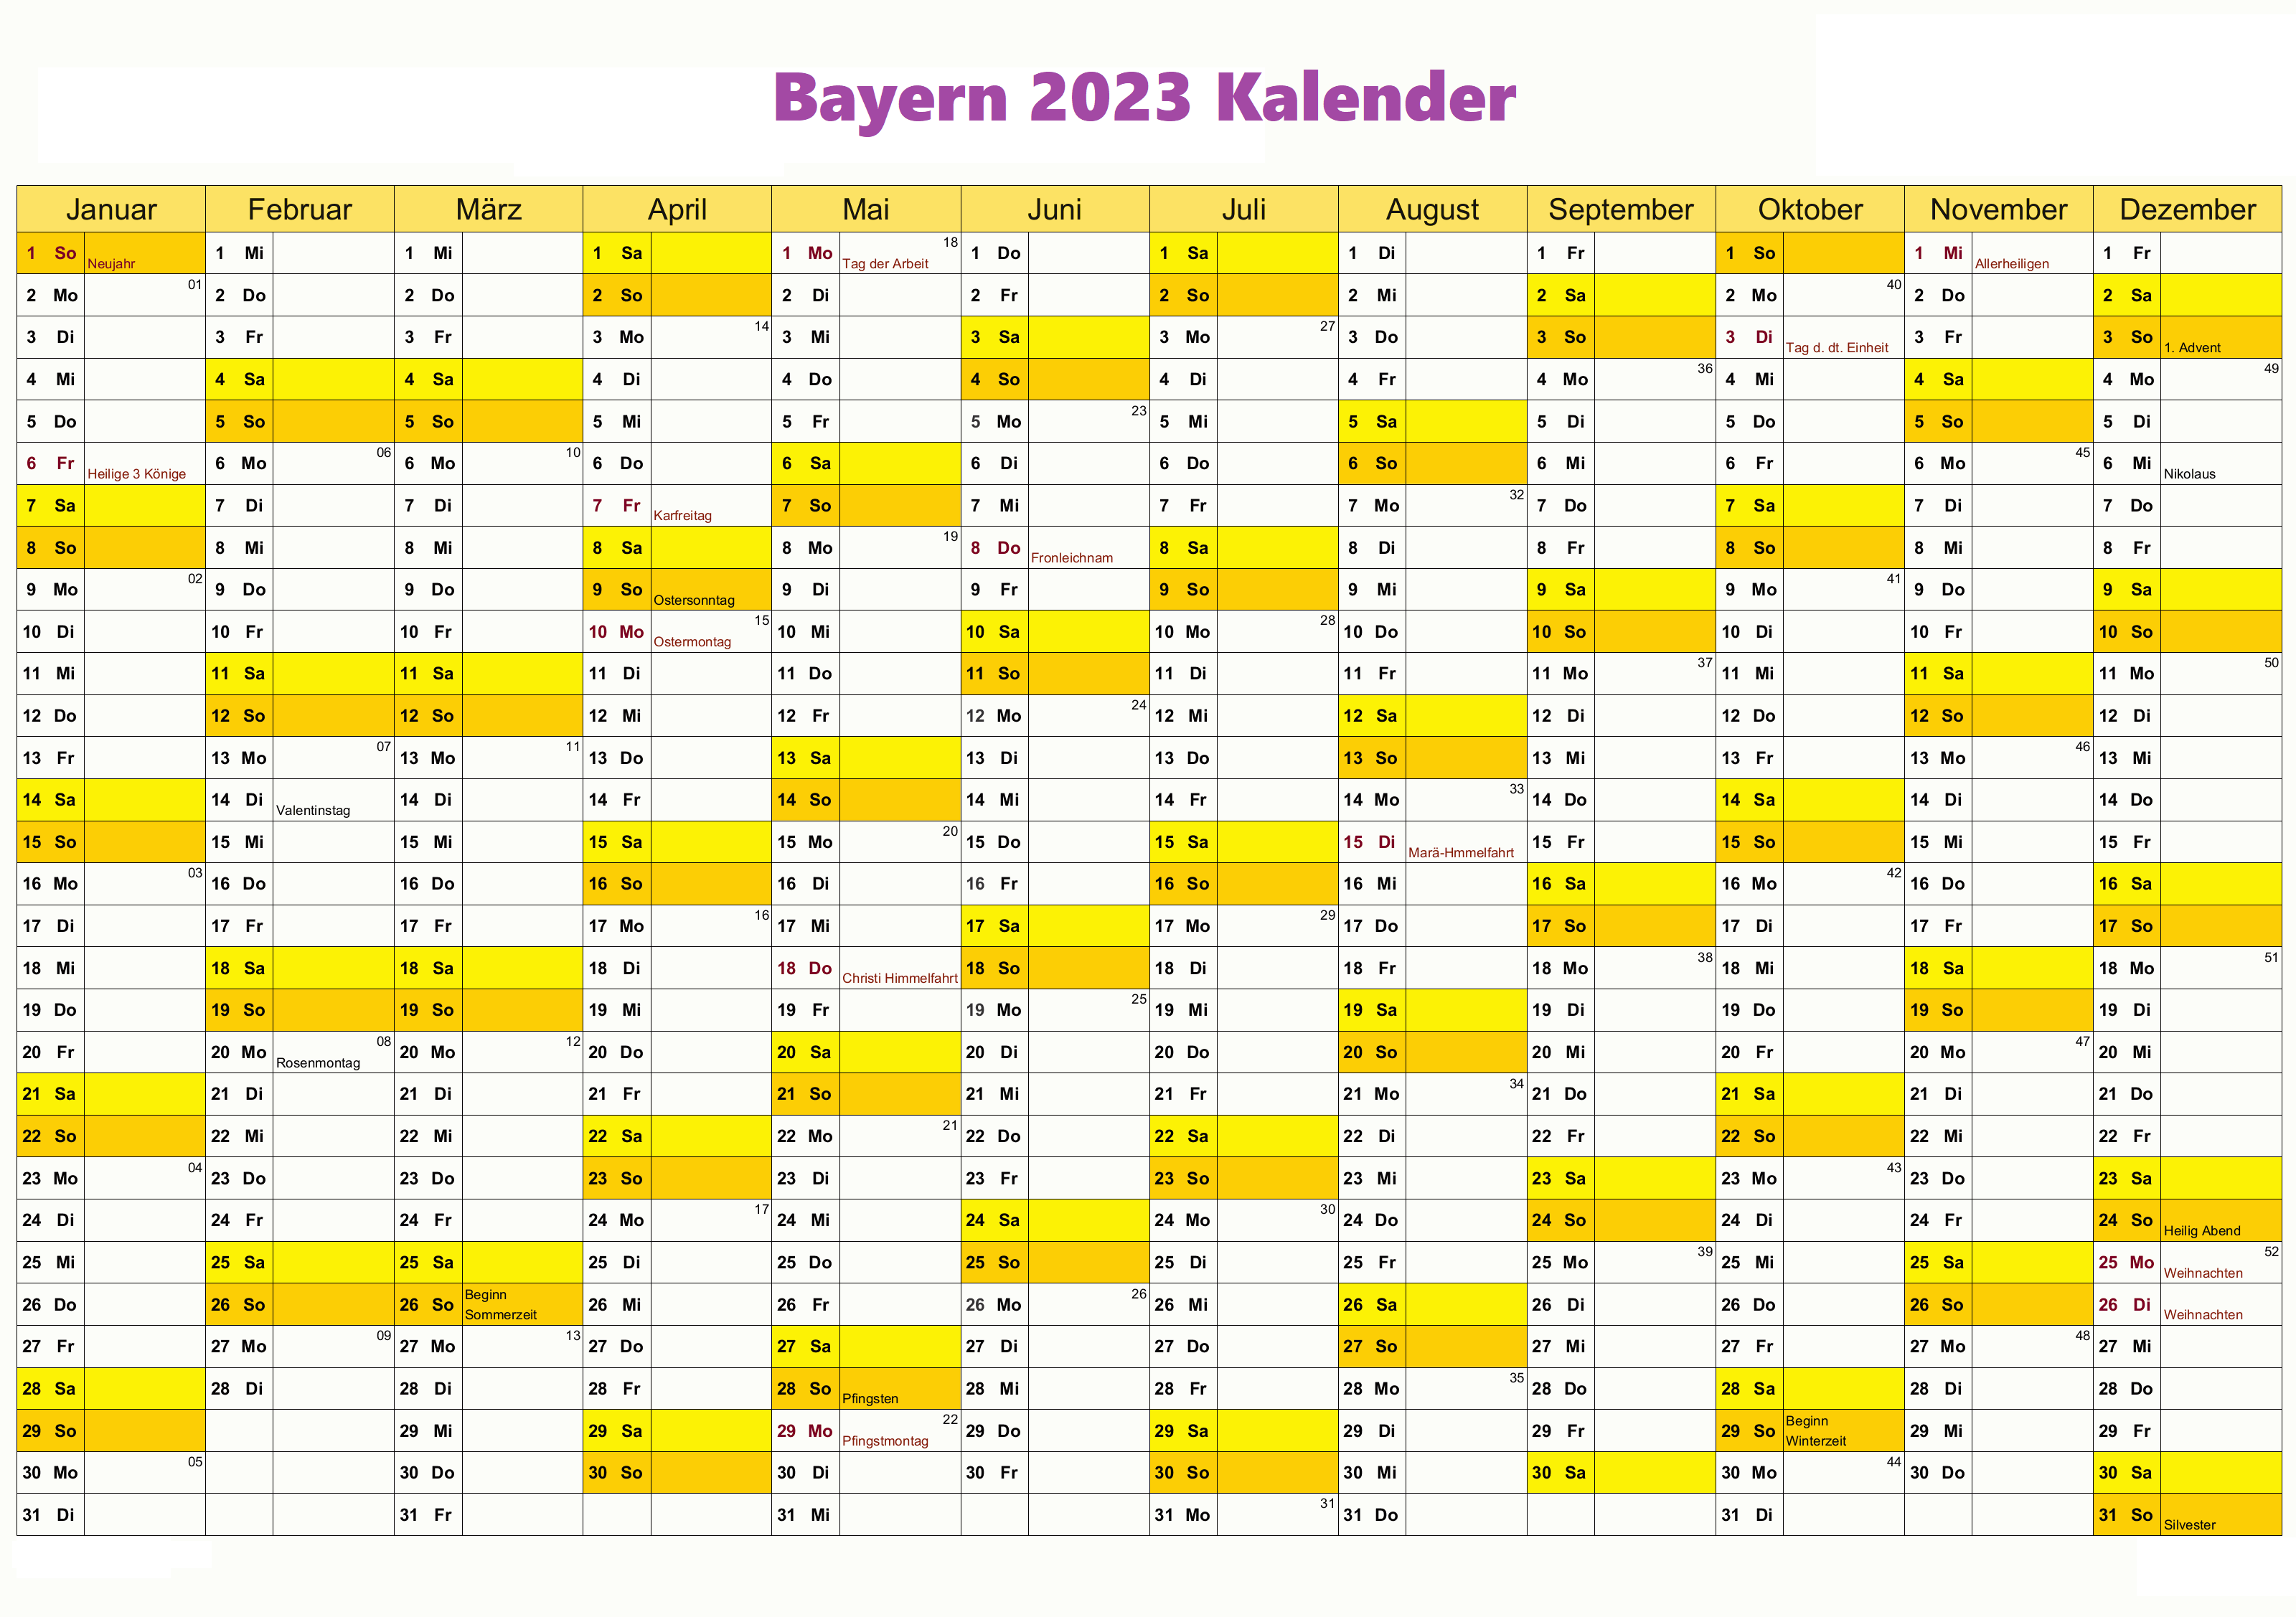 Bayern 2023 Kalender